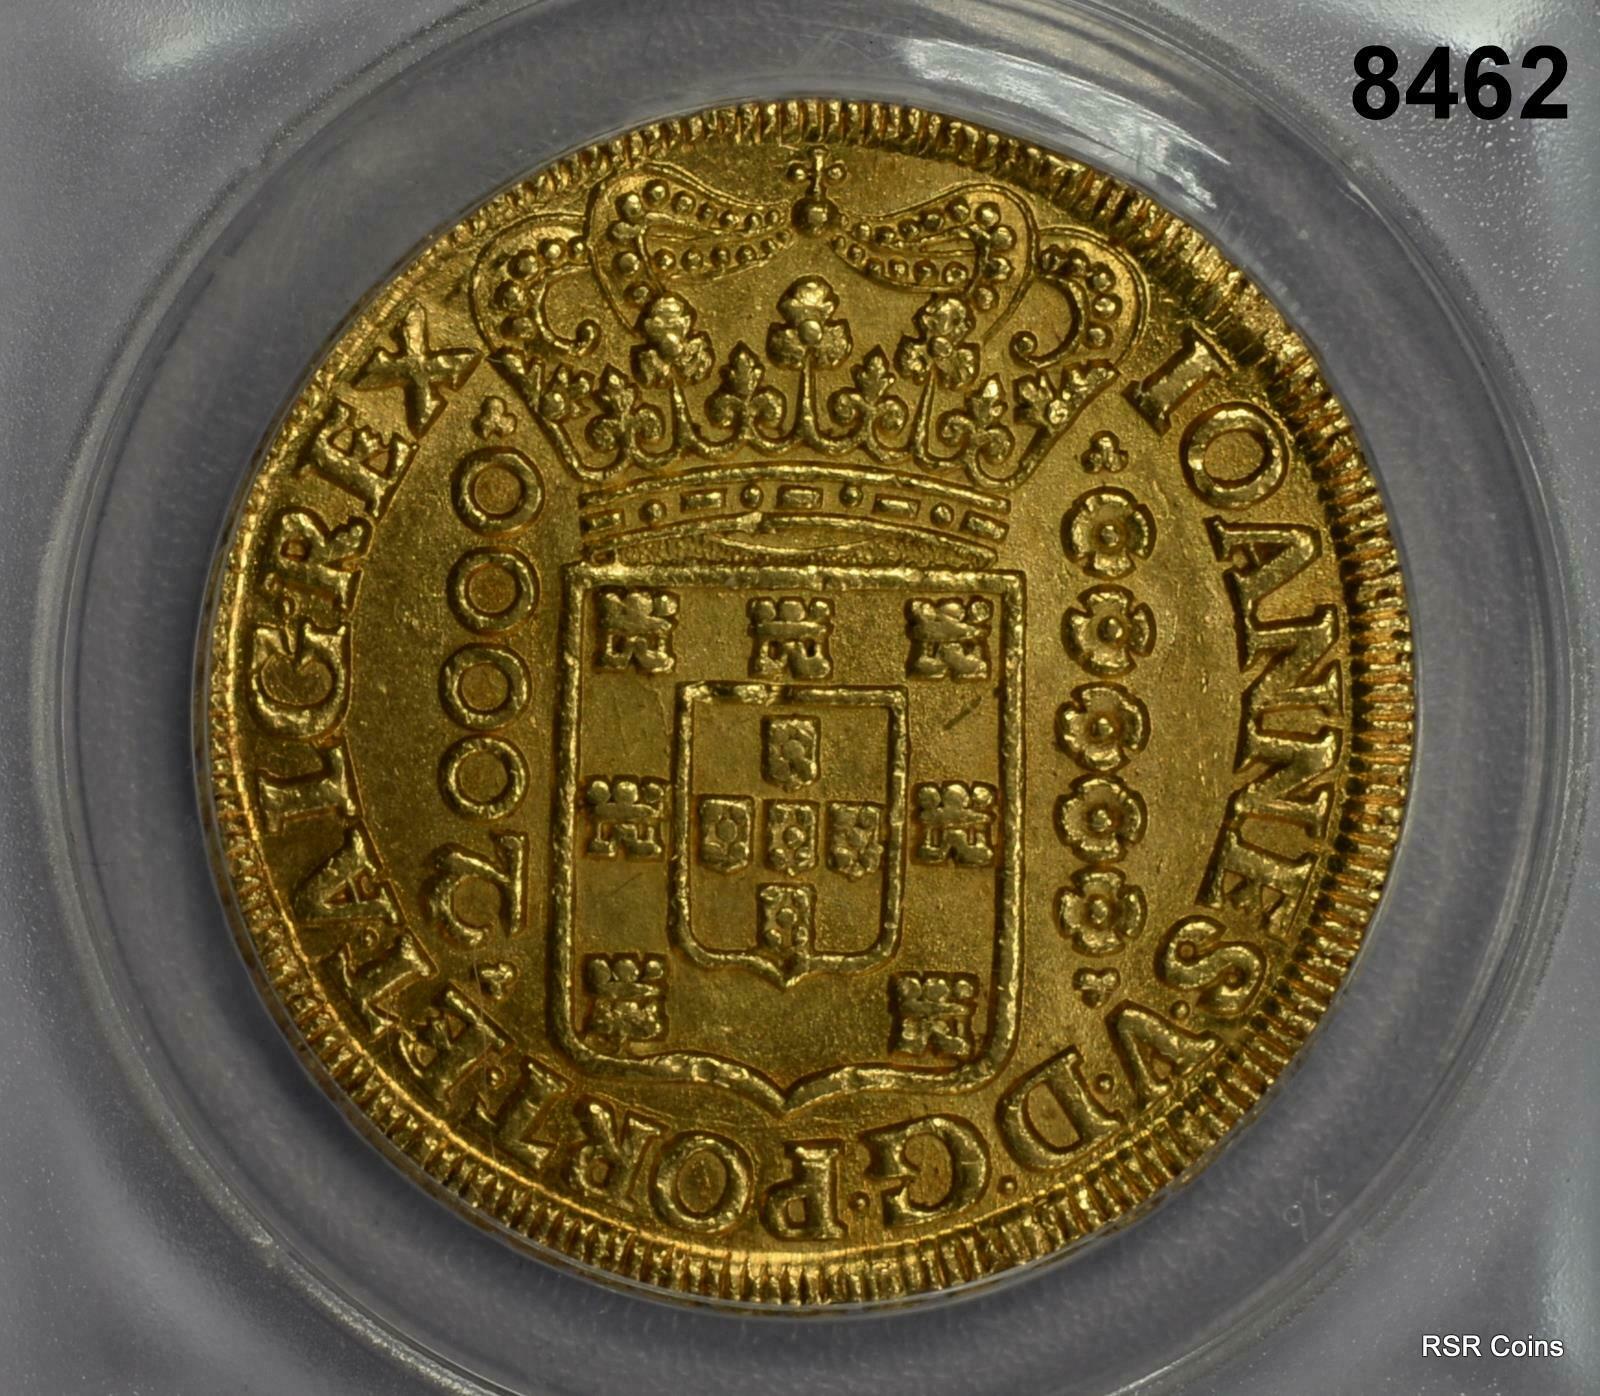 1725 BRAZIL 20,000 REIS GOLD 53.7 GR! ANACS CERTIFIED AU55 RARITY! #8462